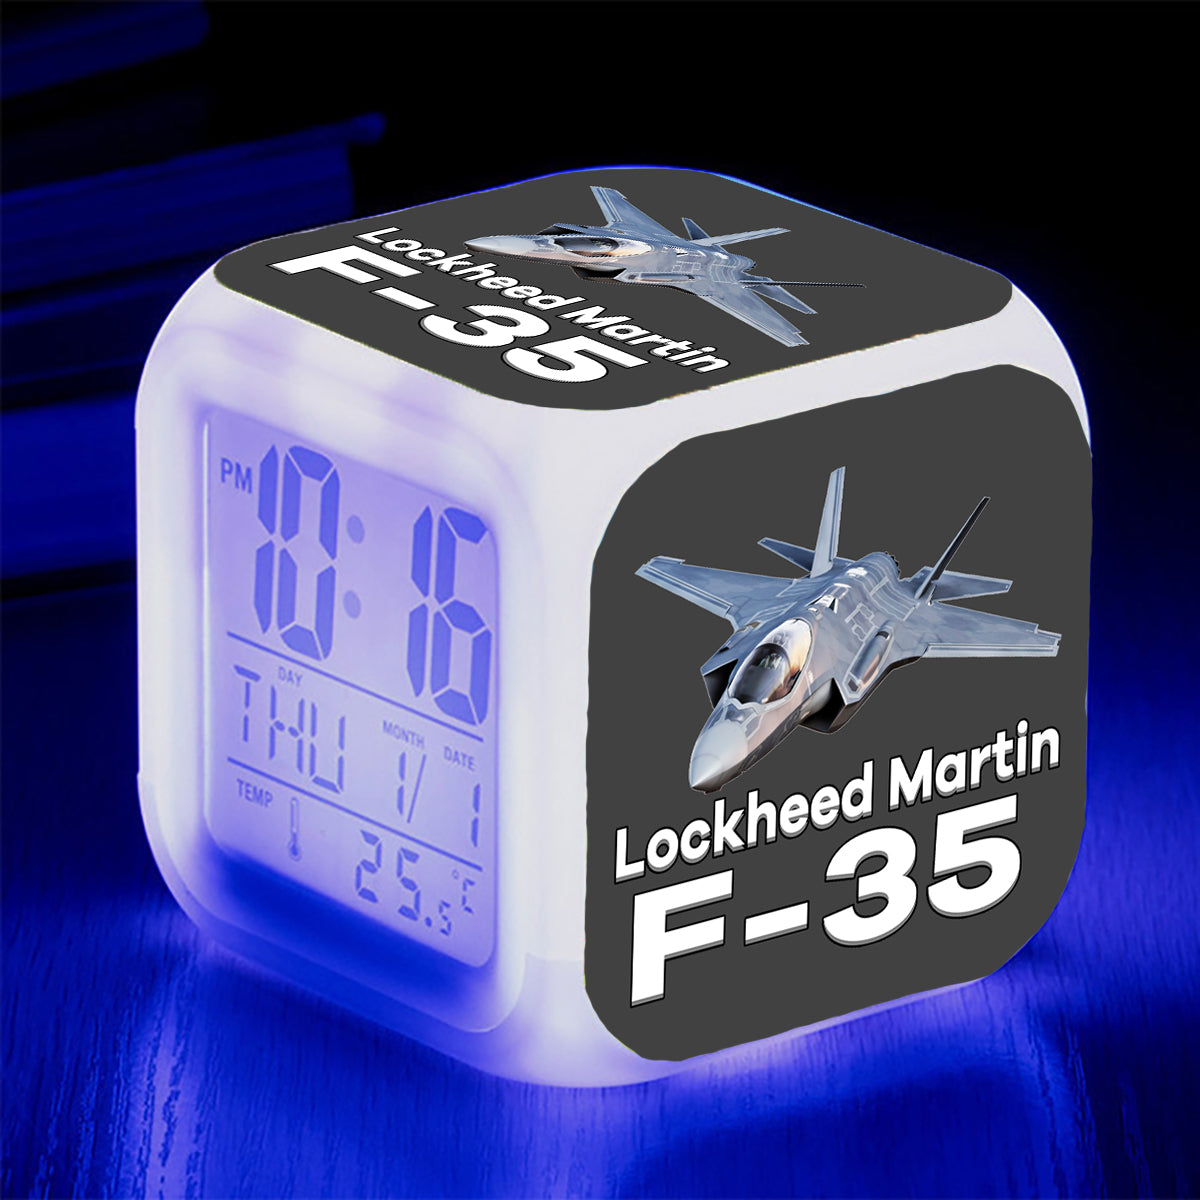 The Lockheed Martin F35 Designed "7 Colour" Digital Alarm Clock